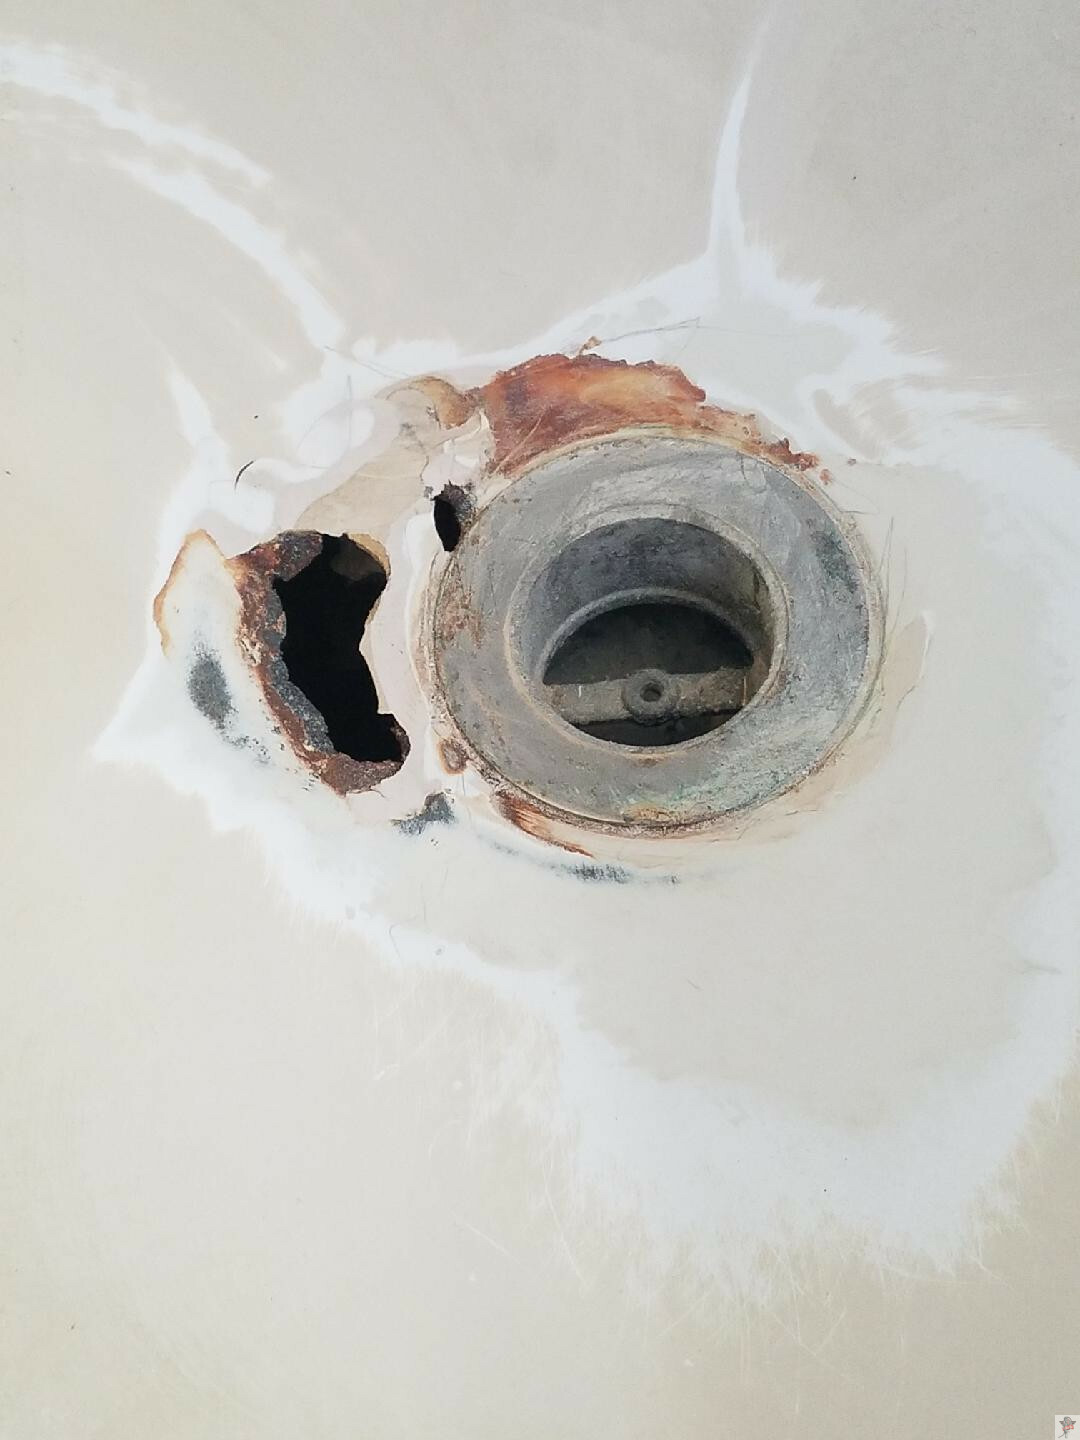 Tub Refinishing Repair Rust More, How To Fix Corroded Bathtub Drain